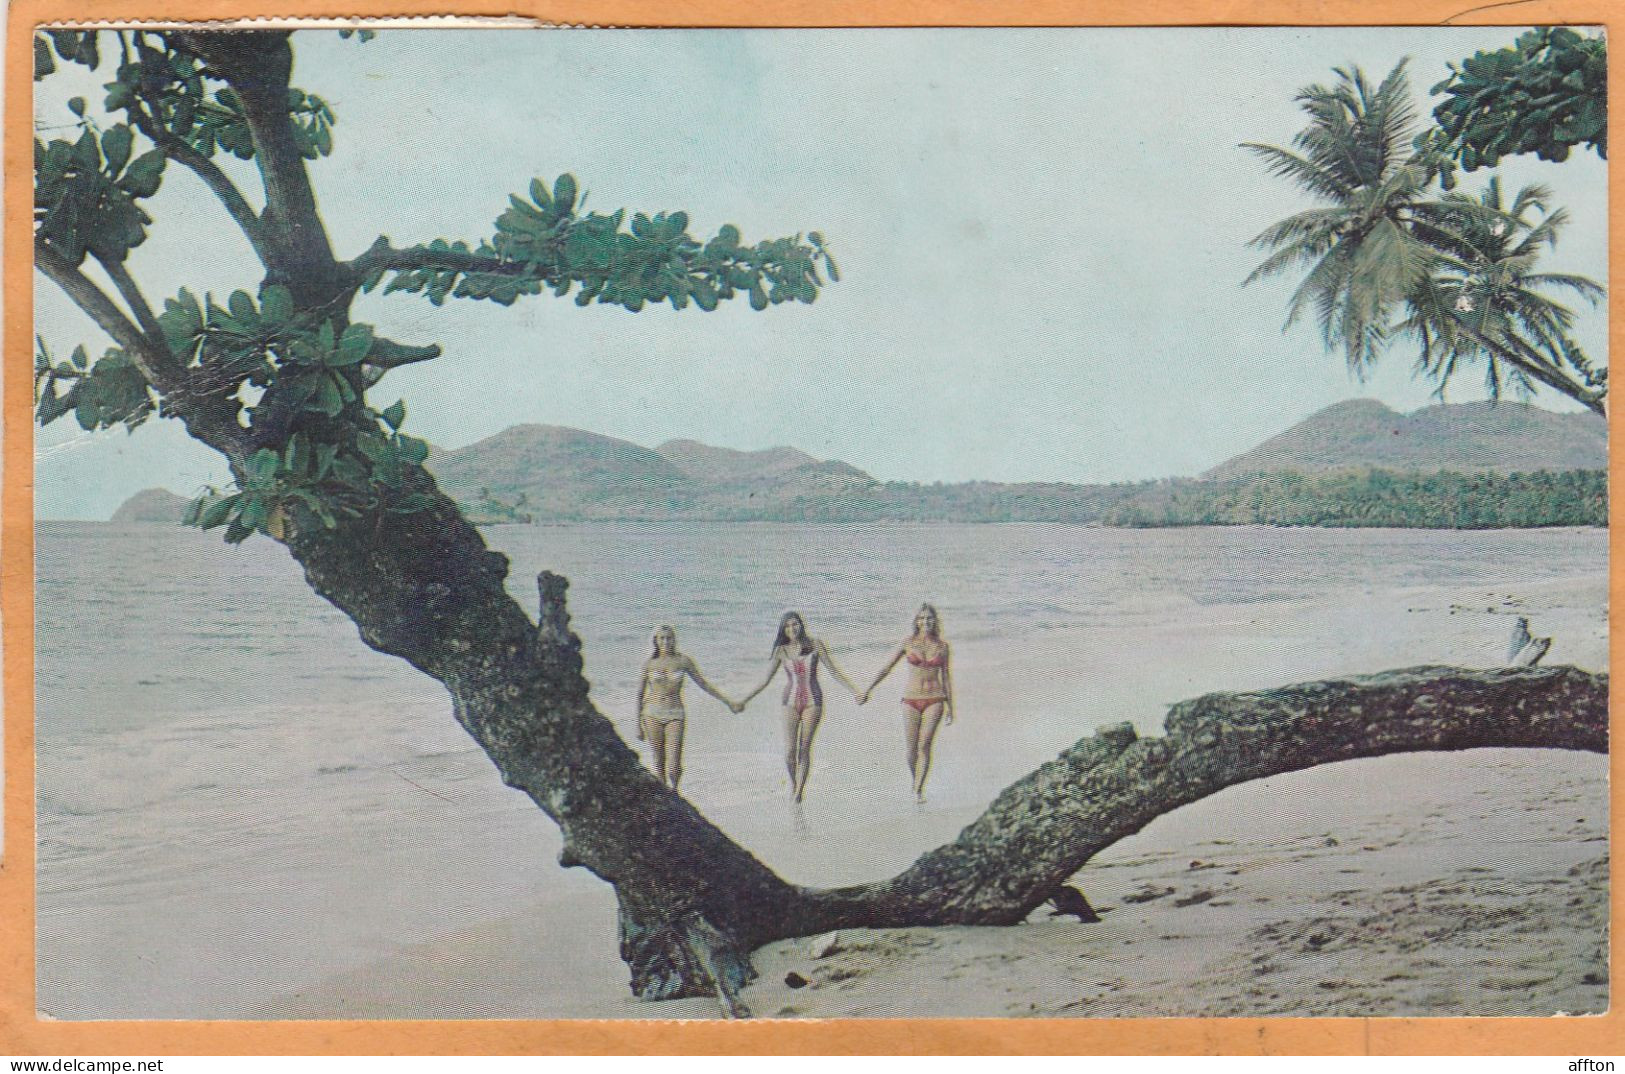 Saint Lucia Old Postcard Mailed - Saint Lucia